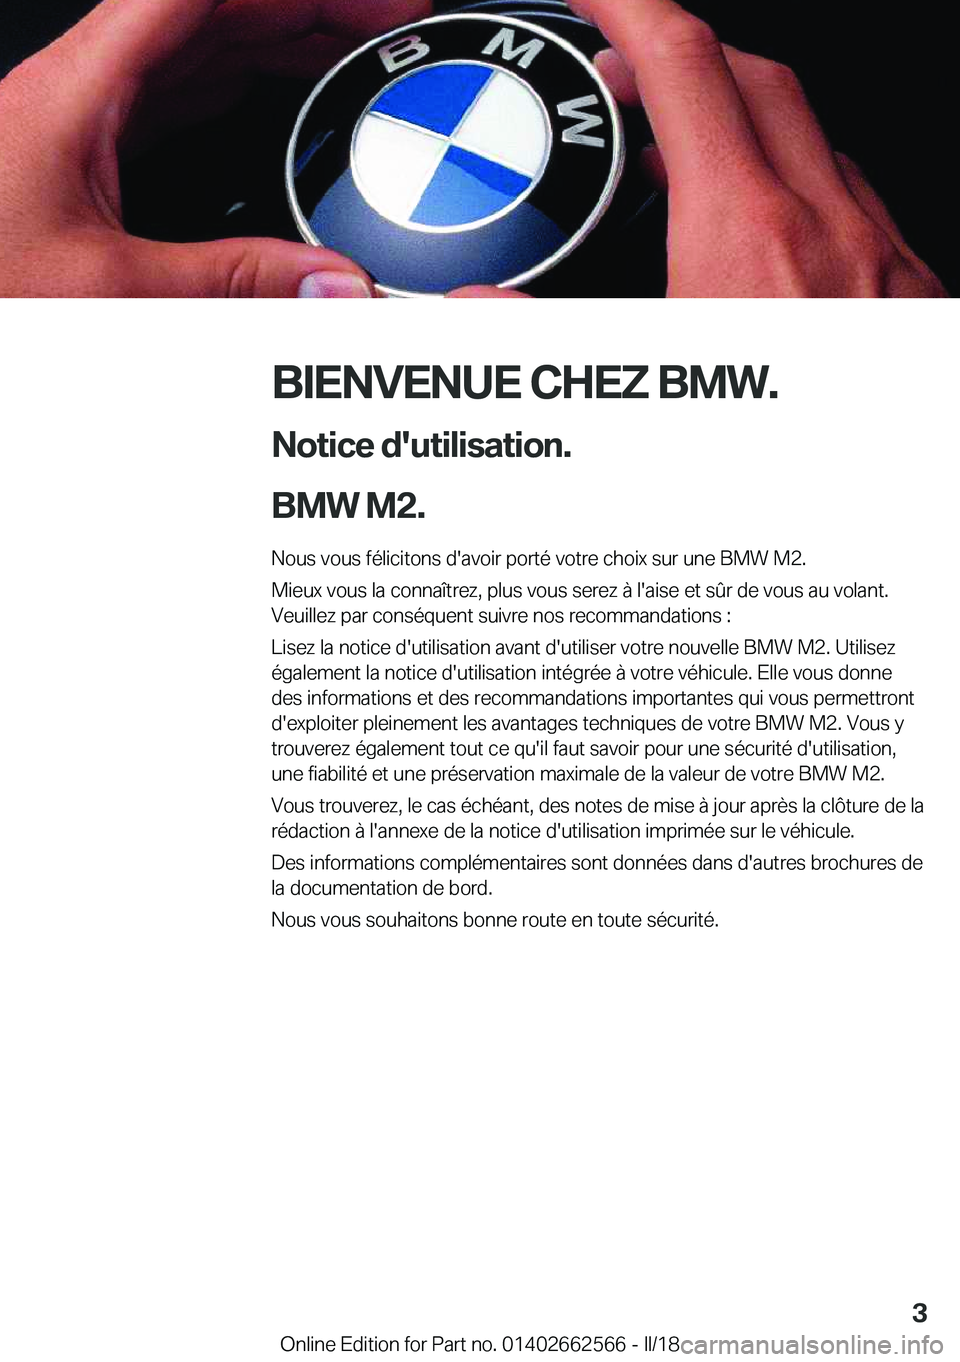 BMW M2 2018  Notices Demploi (in French) �B�I�E�N�V�E�N�U�E��C�H�E�;��B�M�W�.�N�o�t�i�c�e��d�'�u�t�i�l�i�s�a�t�i�o�n�.
�B�M�W��M�2�.� �N�o�u�s� �v�o�u�s� �f�é�l�i�c�i�t�o�n�s� �d�'�a�v�o�i�r� �p�o�r�t�é� �v�o�t�r�e� �c�h�o�i�x